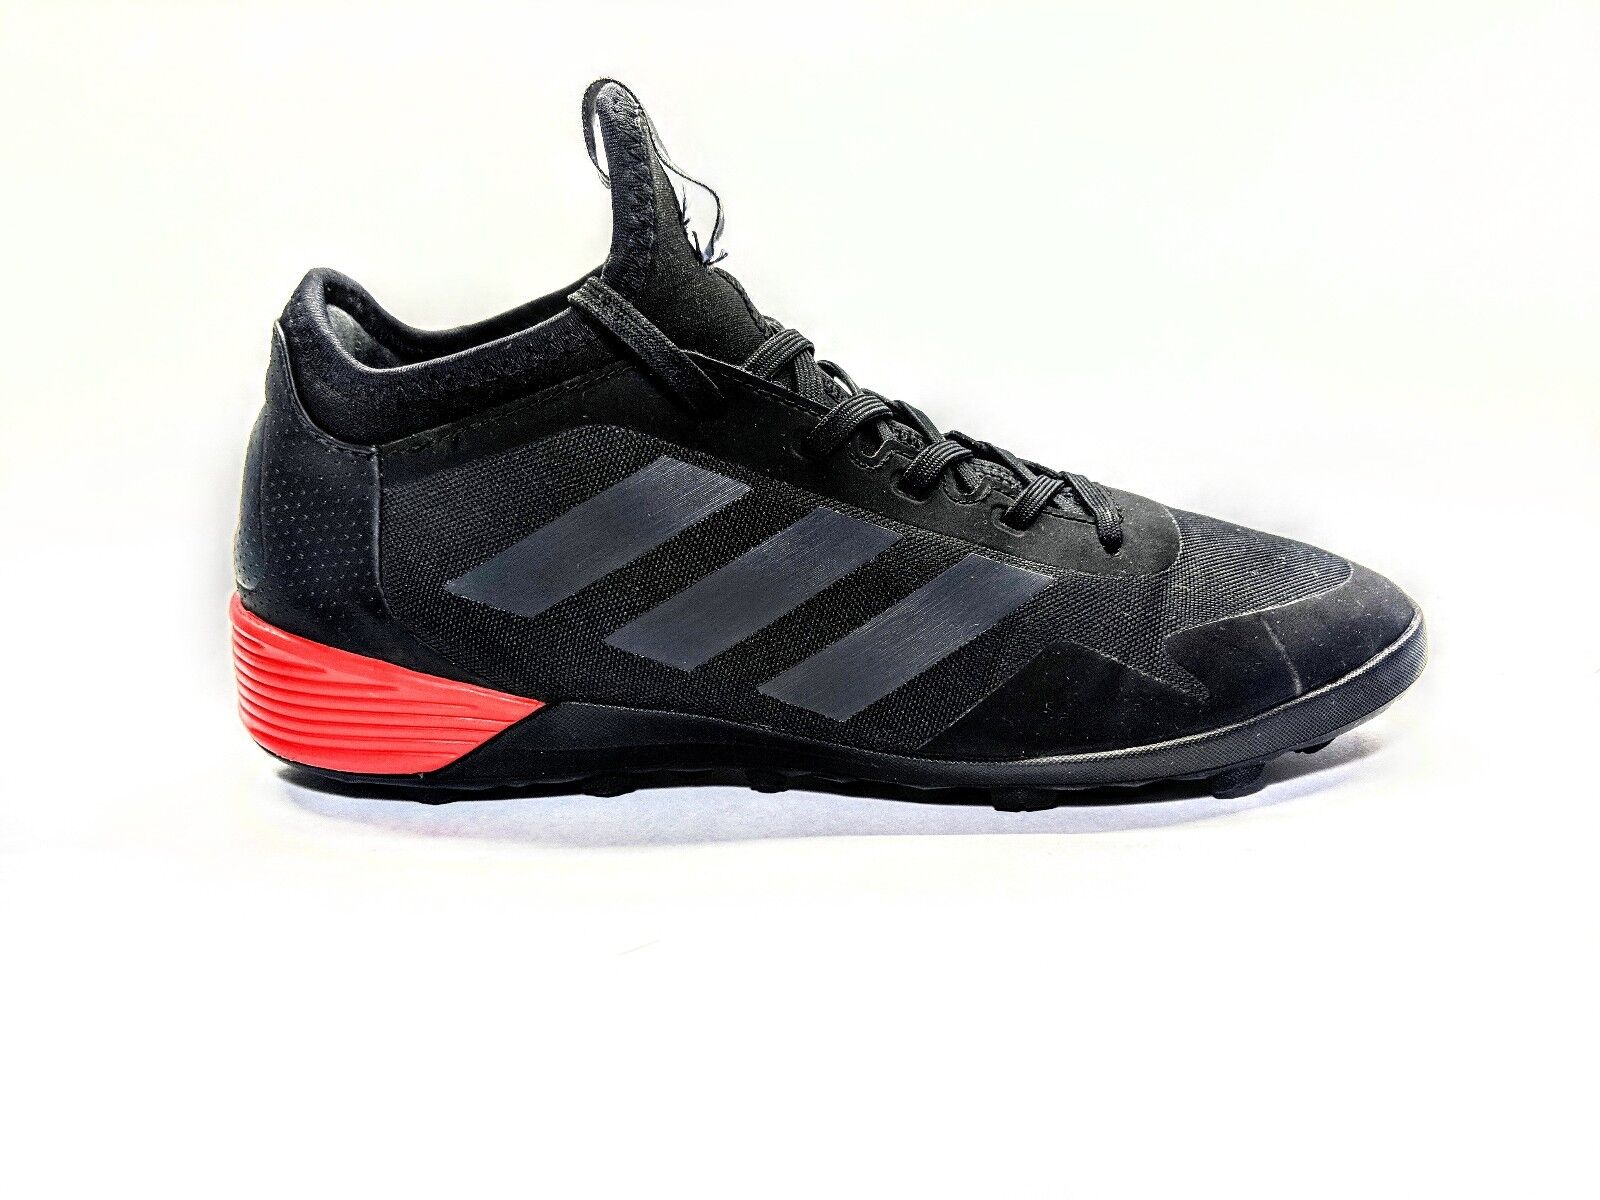 Adidas Ace Tango 17.2 TF Turf Indoor Soccer Black Red Sz 6.5 BA8539 eBay